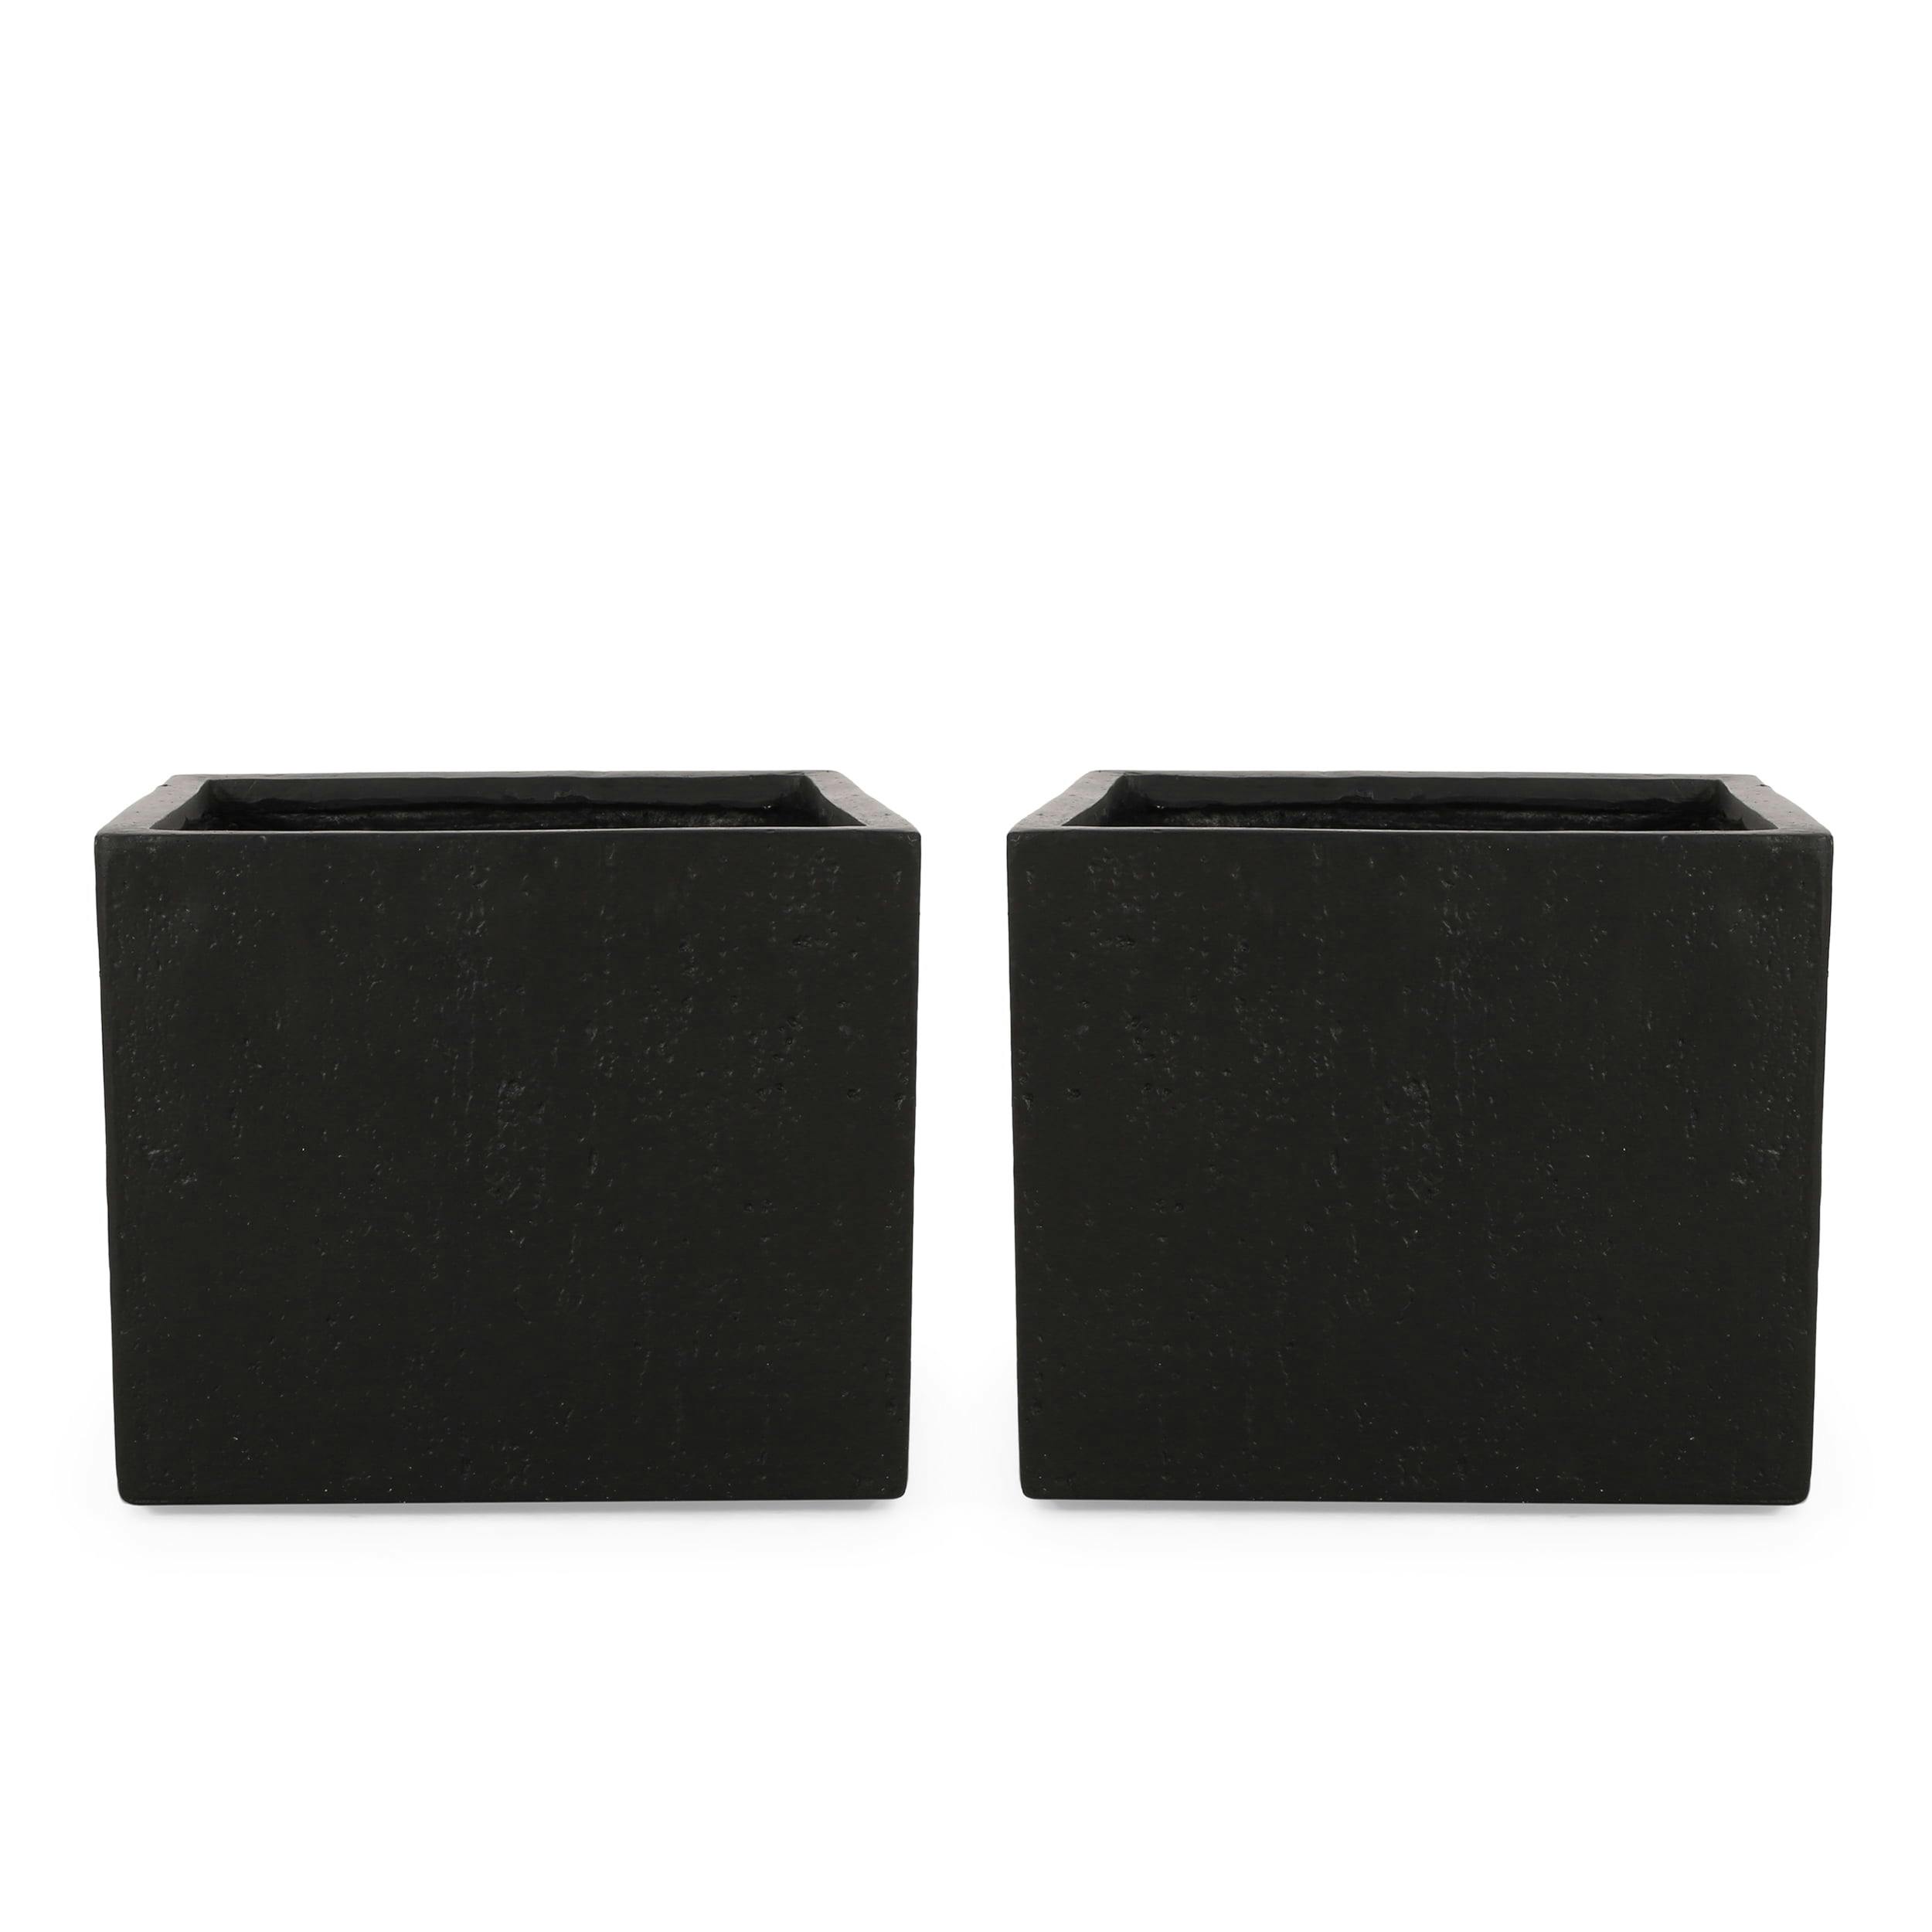 Elegant Square Cast Stone Outdoor Planter Set, Black, Set of 2